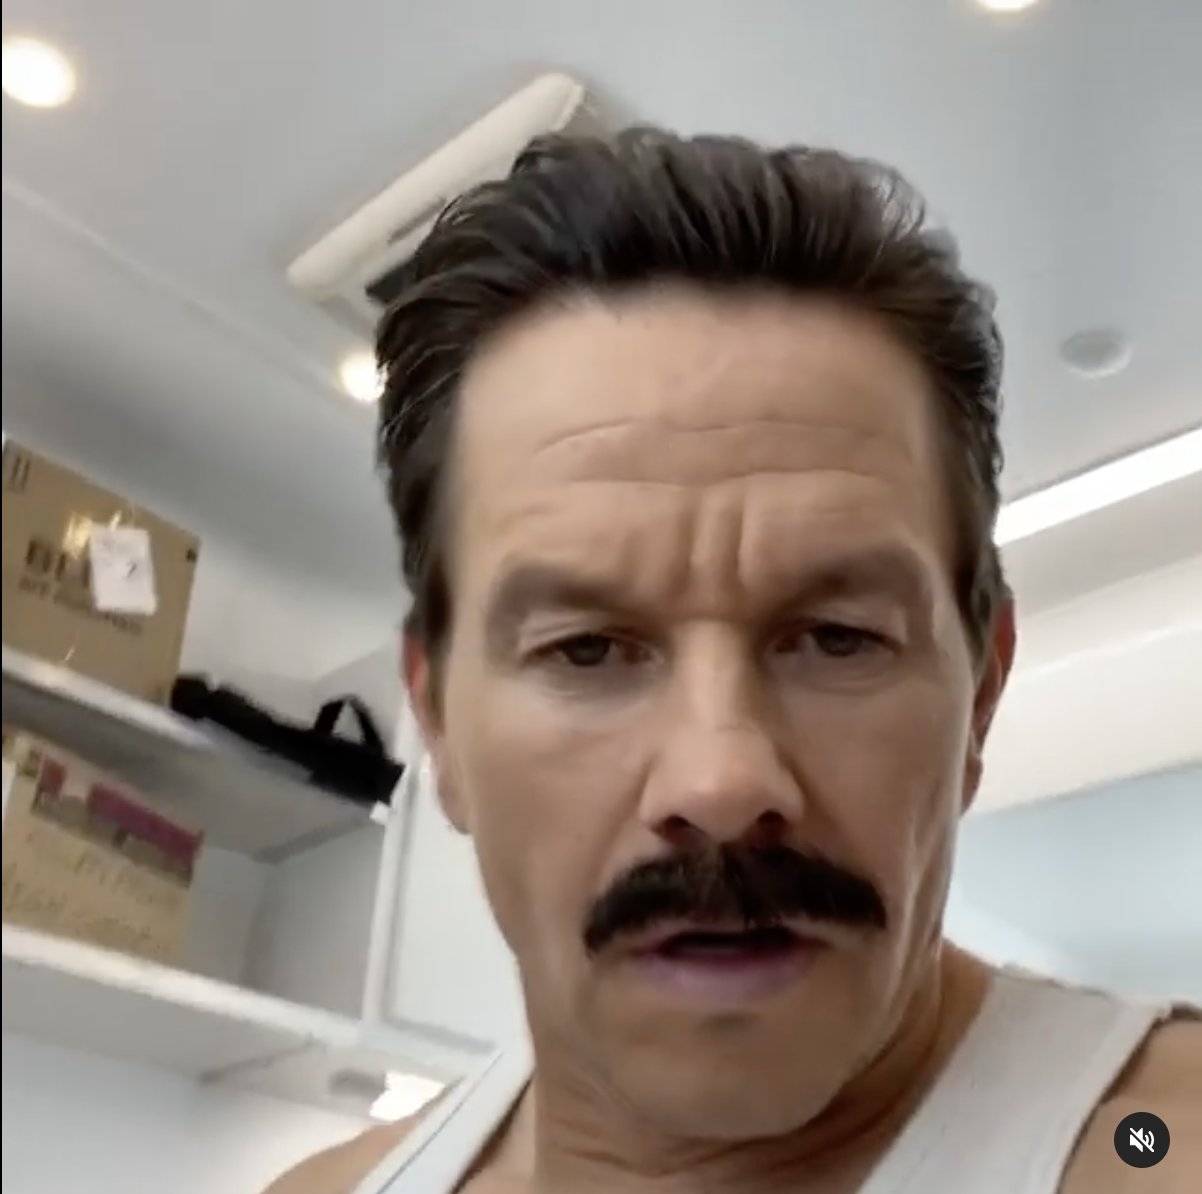 Mark Wahlberg fará parte do elenco do filme de Uncharted como Sully -  TecMundo